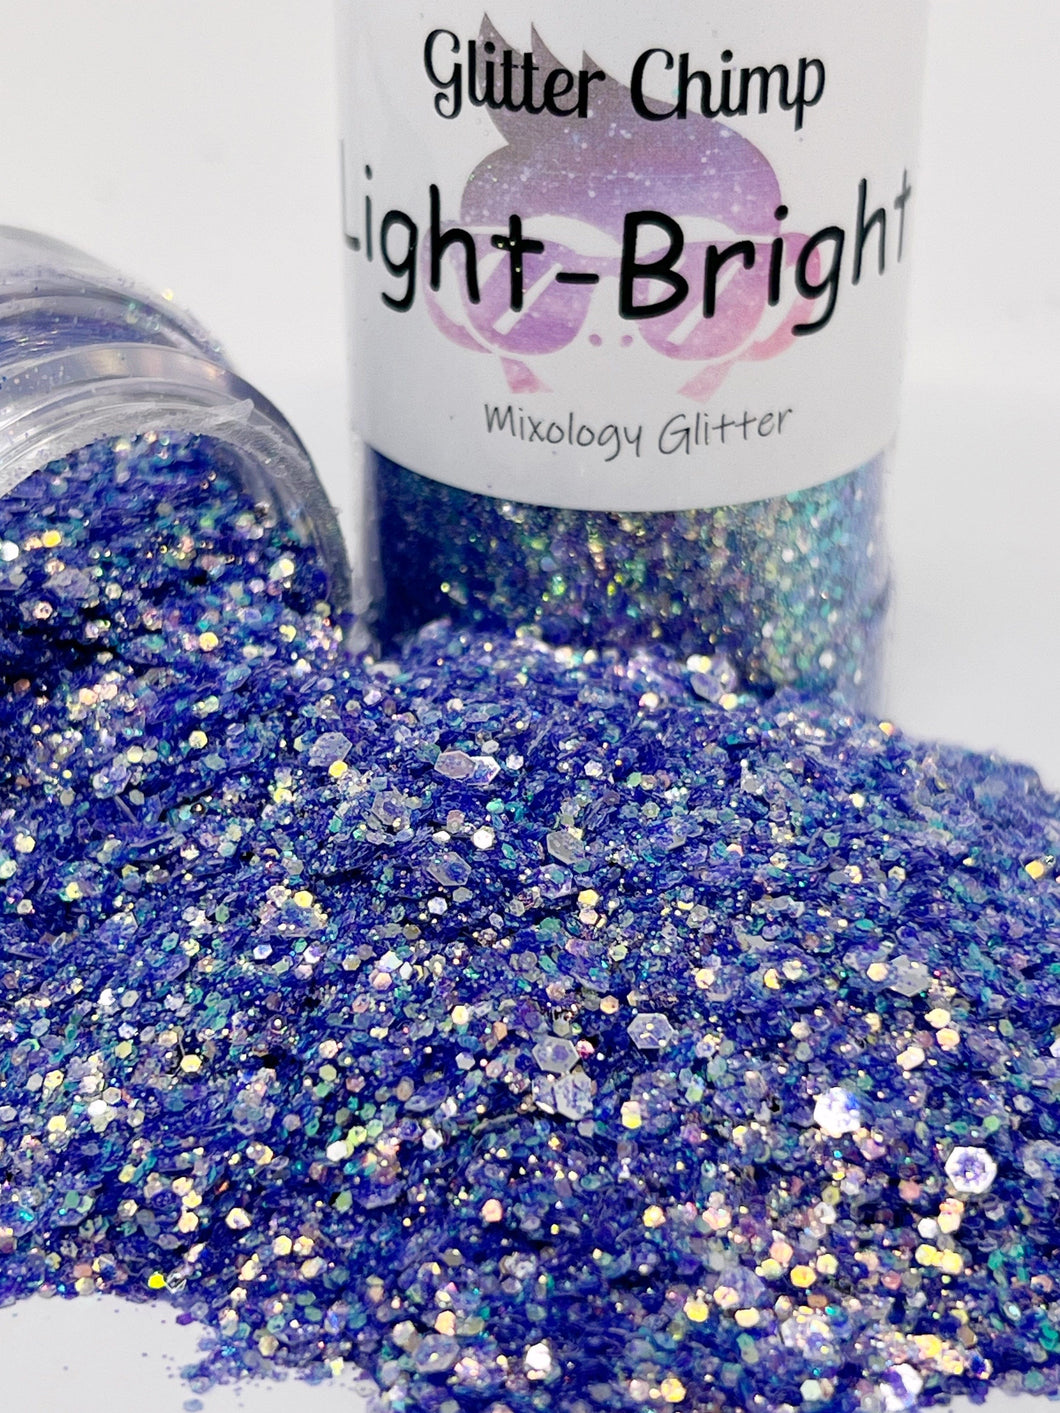 Light-Bright - Mixology Glitter